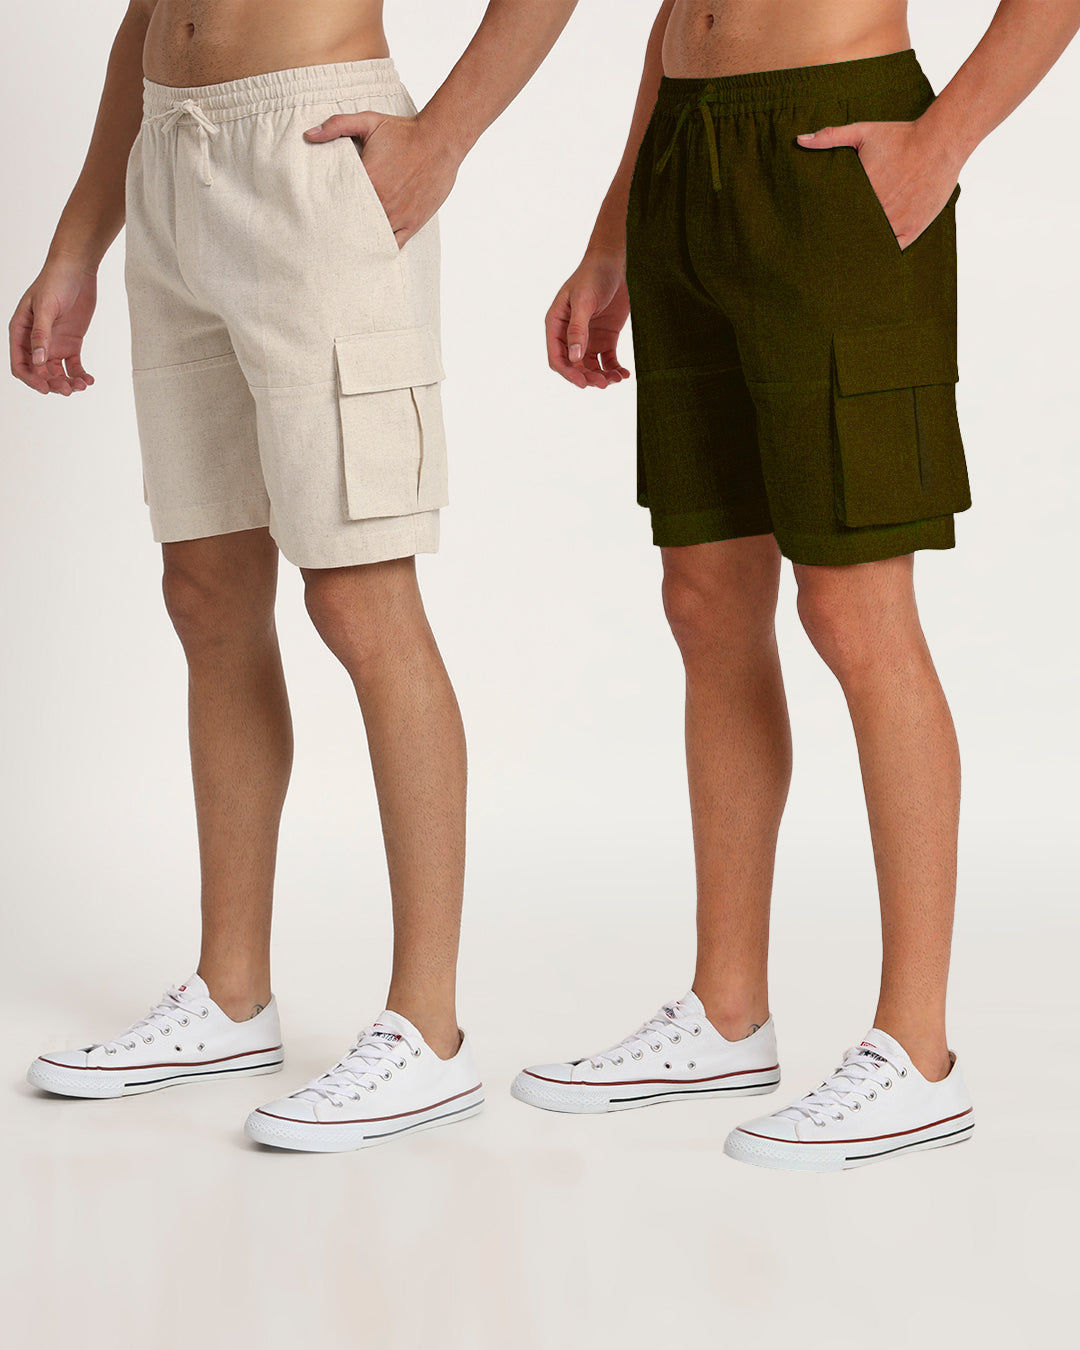 Combo : Slub Comfort Cargo Shorts Beige & Olive Green Men's Shorts